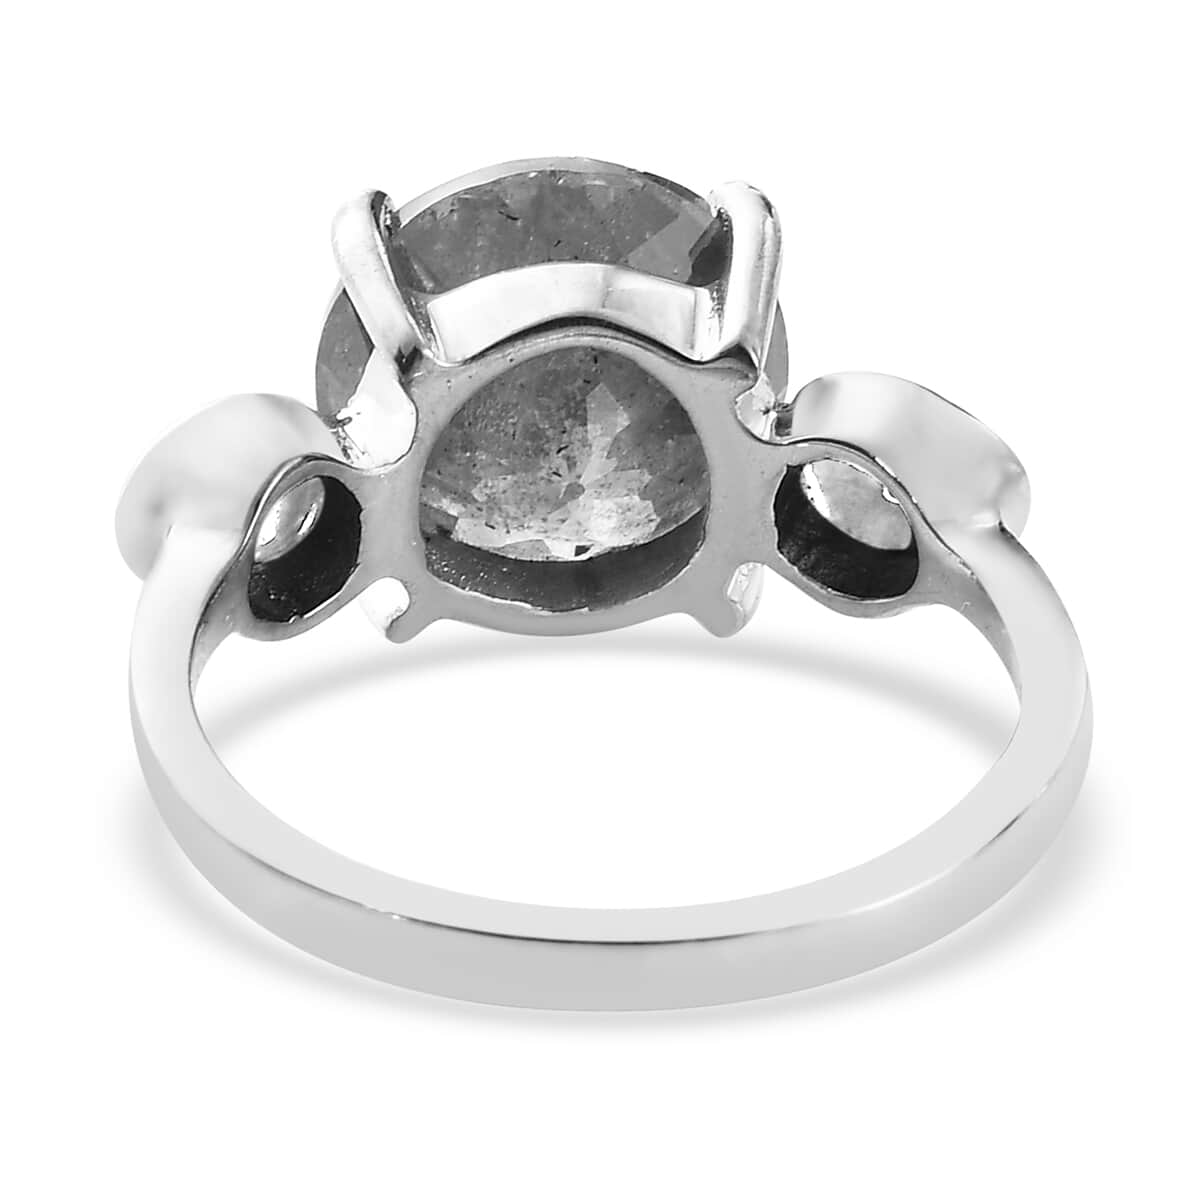 Picos Altos Light Orange Sphalerite and Polki Diamond Ring in Platinum Over Sterling Silver (Size 7.0) 5.35 ctw image number 4